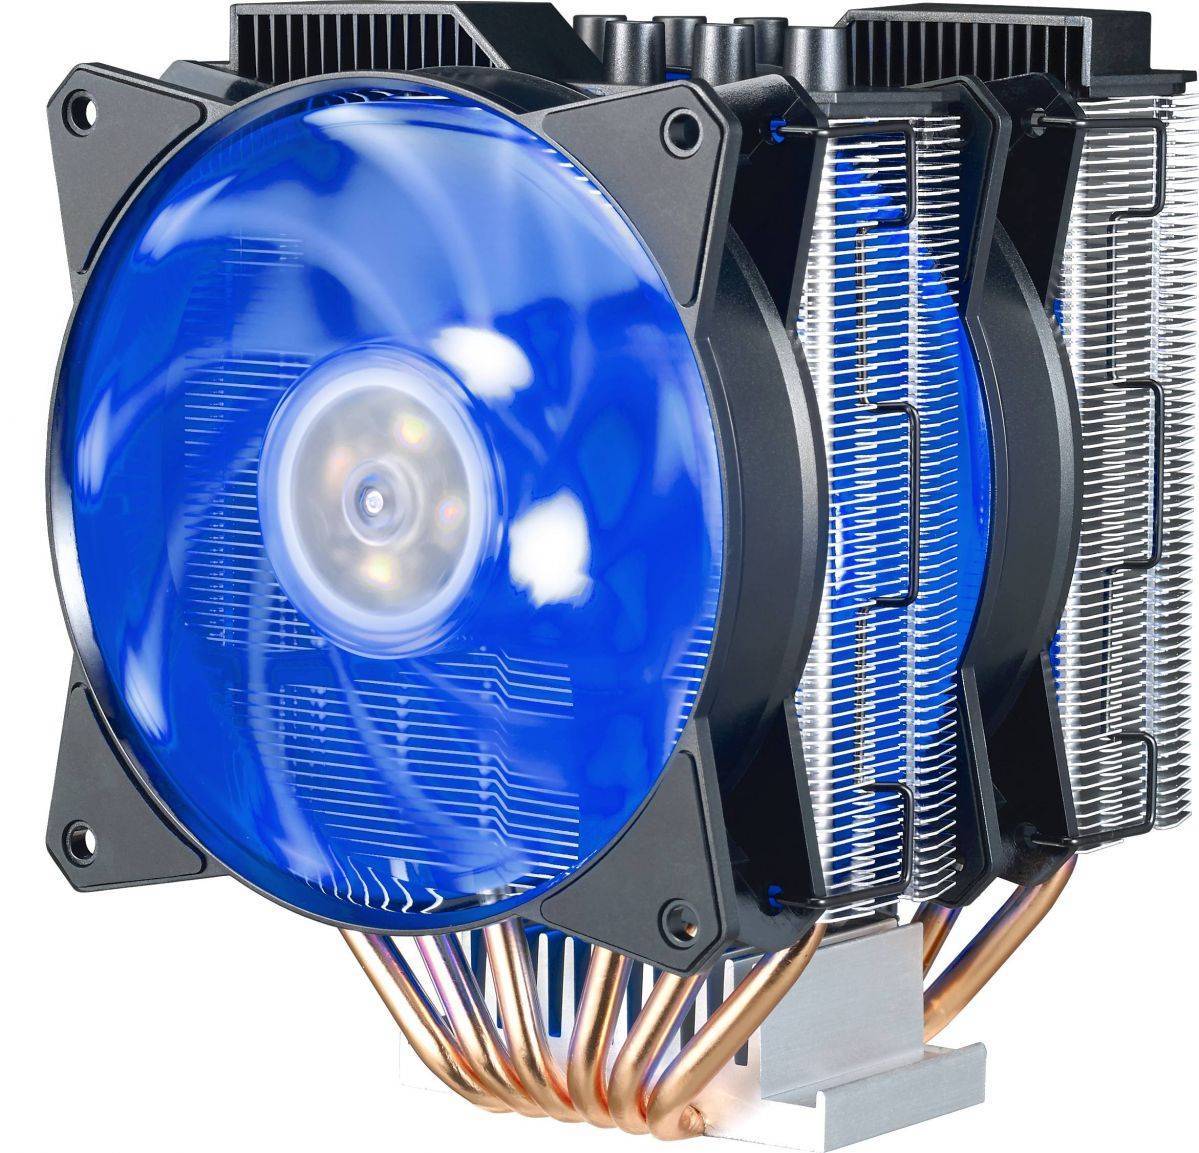 Cooler Master CPU Cooler MasterAir MA620P, 600-2400 RPM, 200W, RGB LED fan, RGB lighting controller, Full Socket Support